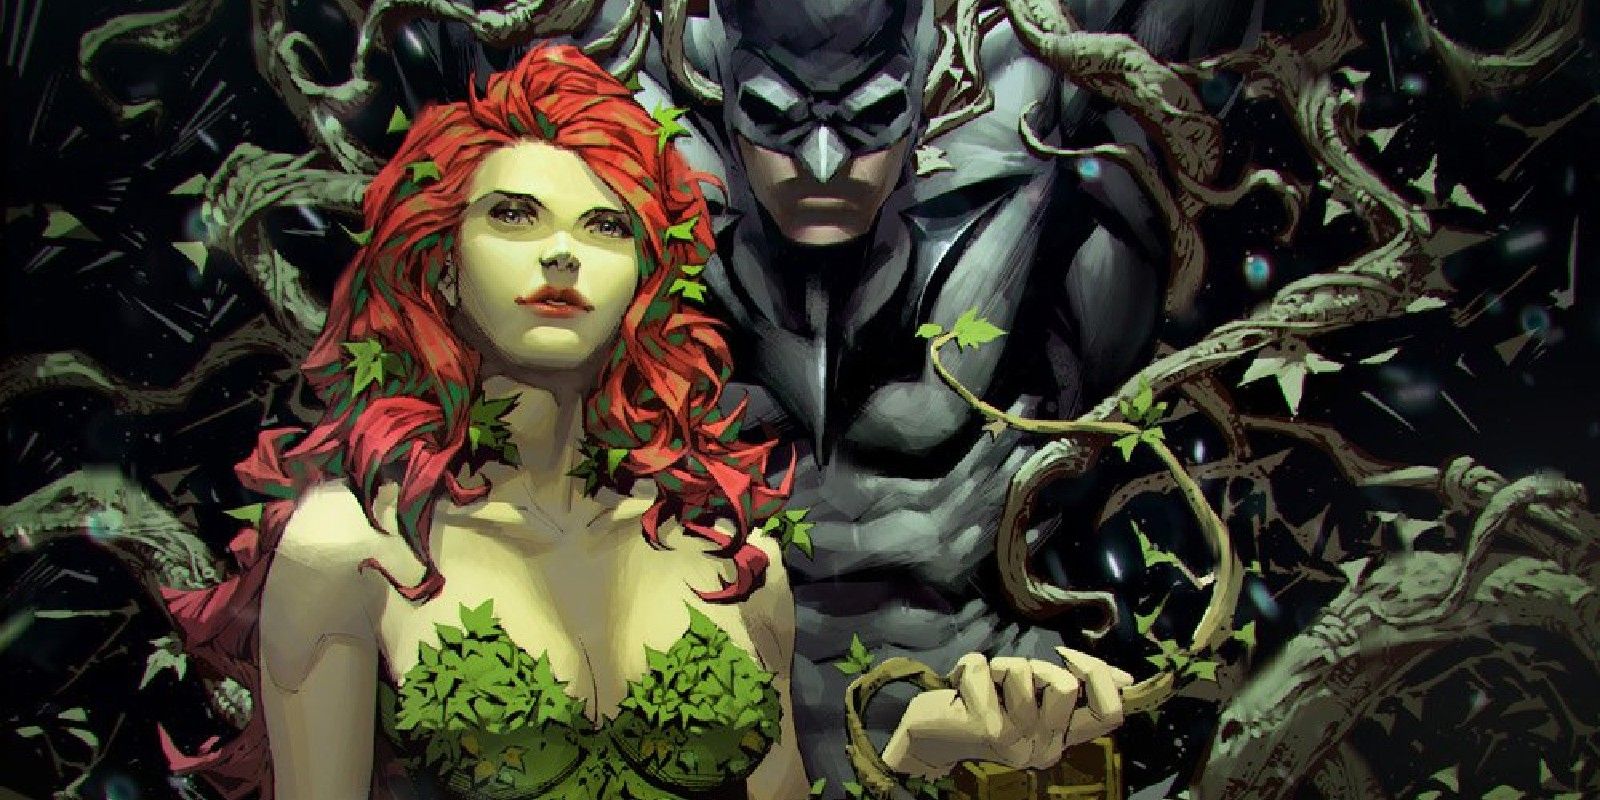 Poison Ivy (left) captures Batman (right) with vines.